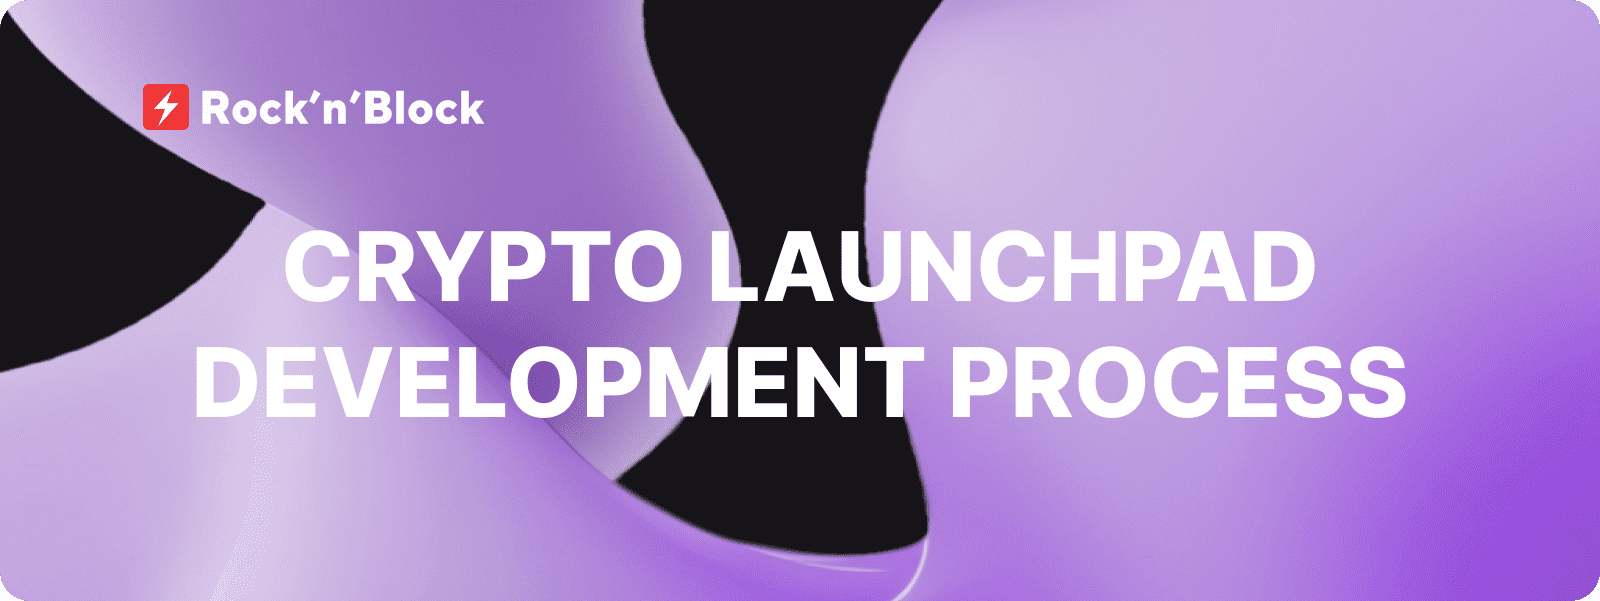 The Crypto Launchpad Development Process